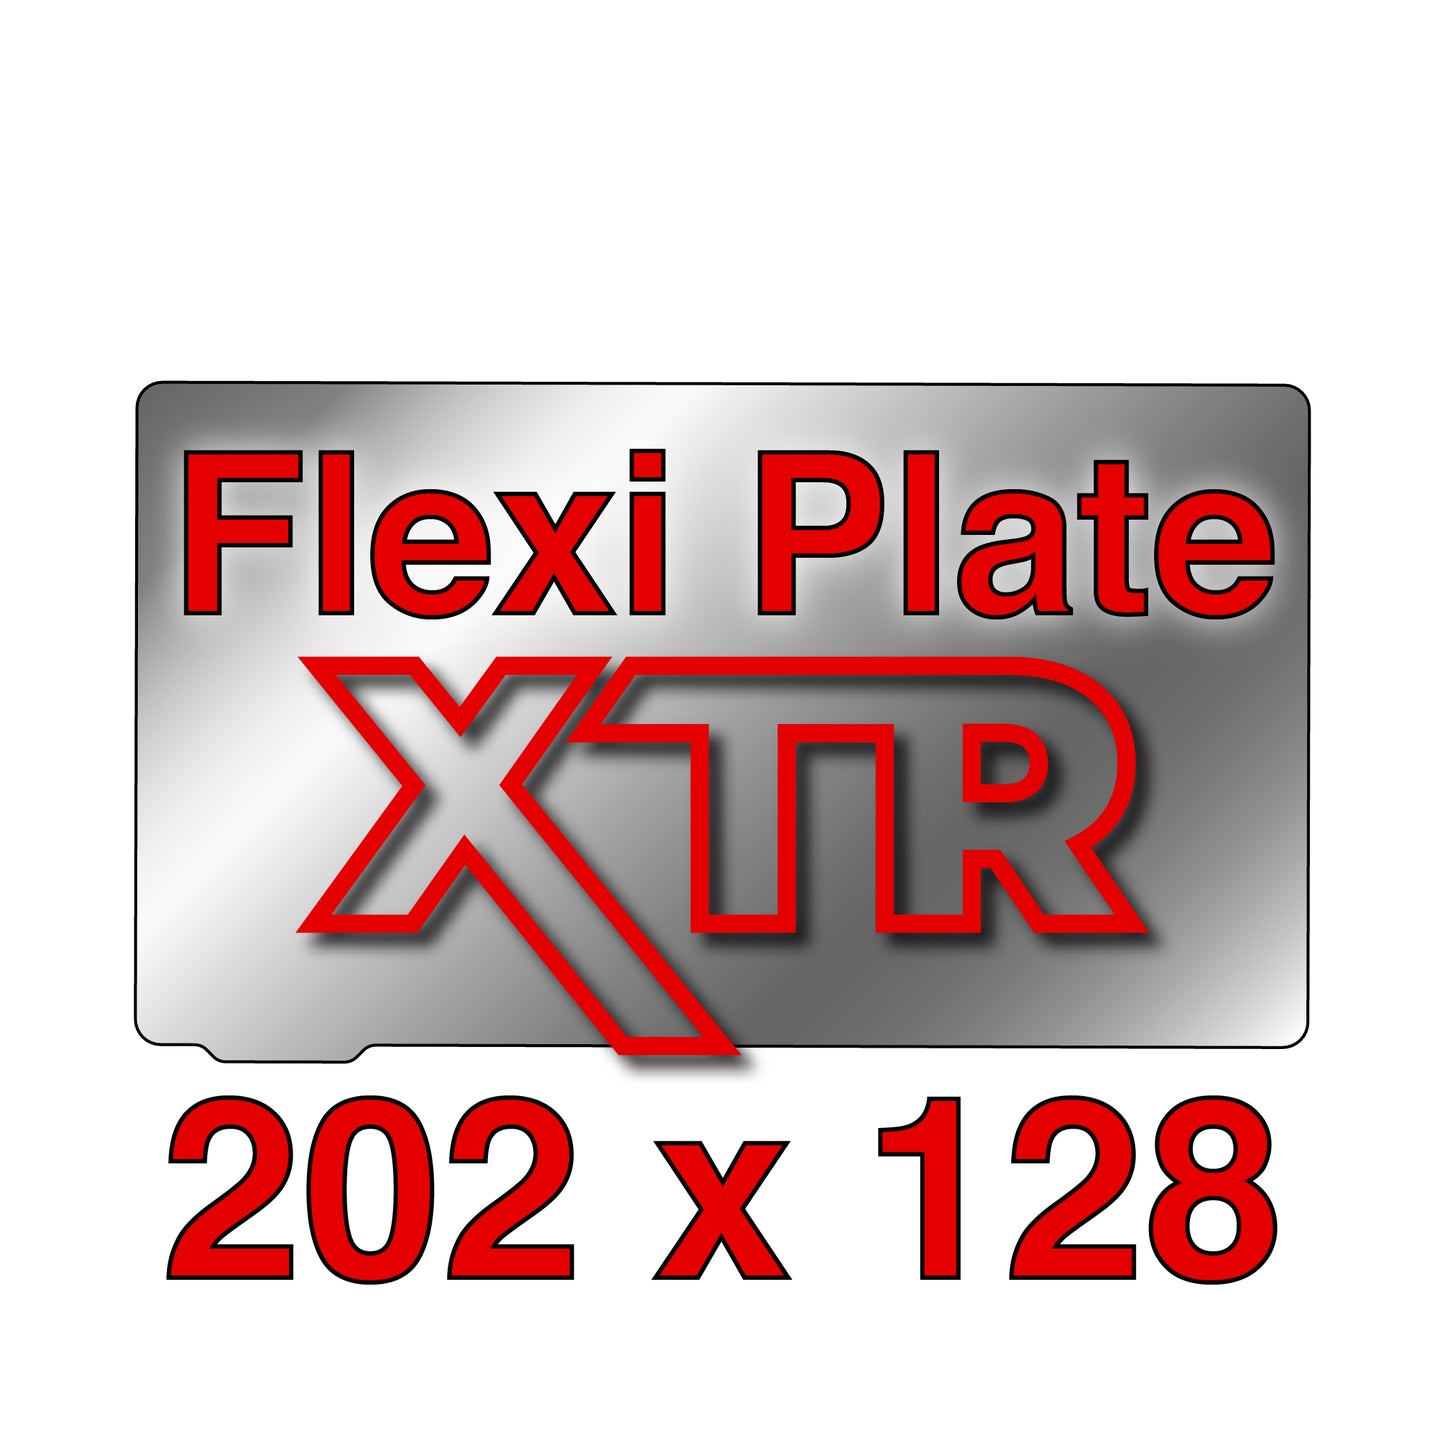 XTR Flexi Plate - 202 x 128